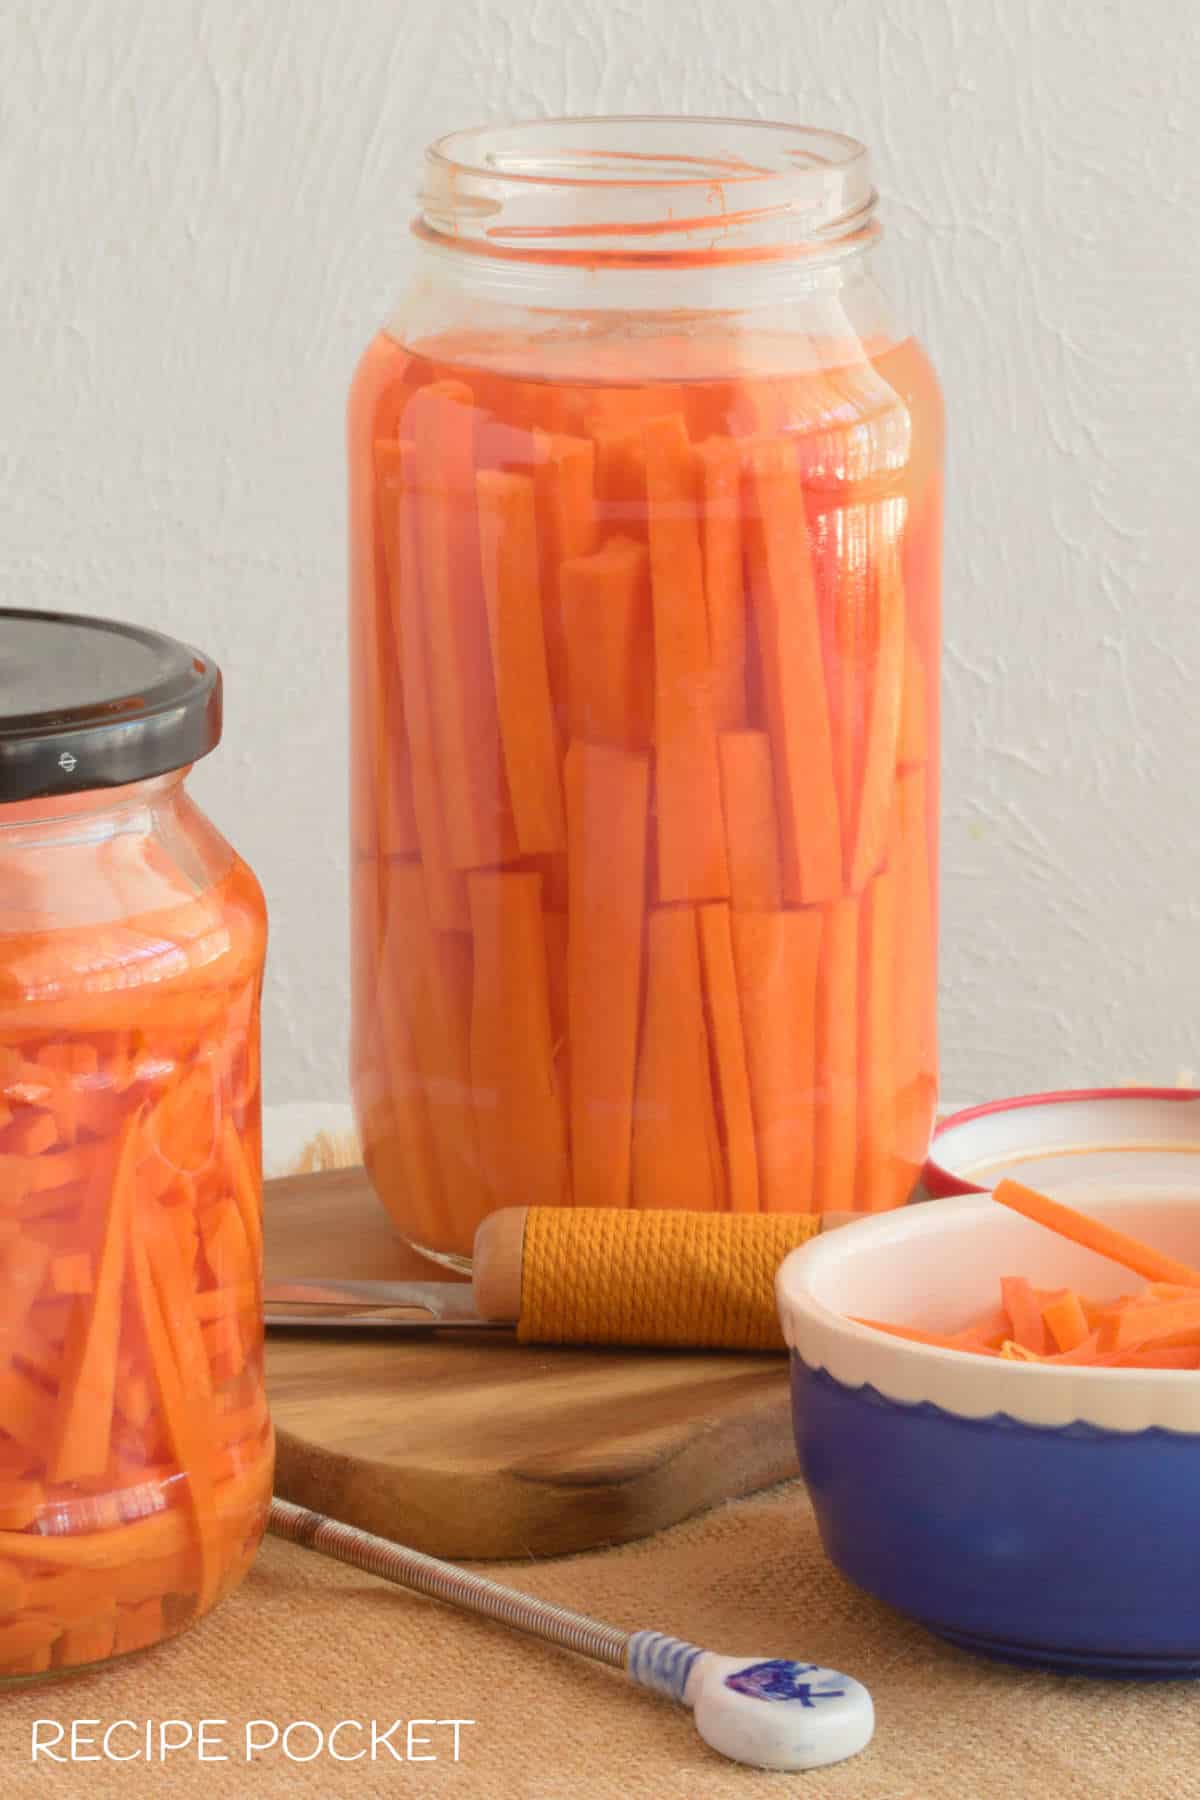 Carrot sticks in pickle jar.